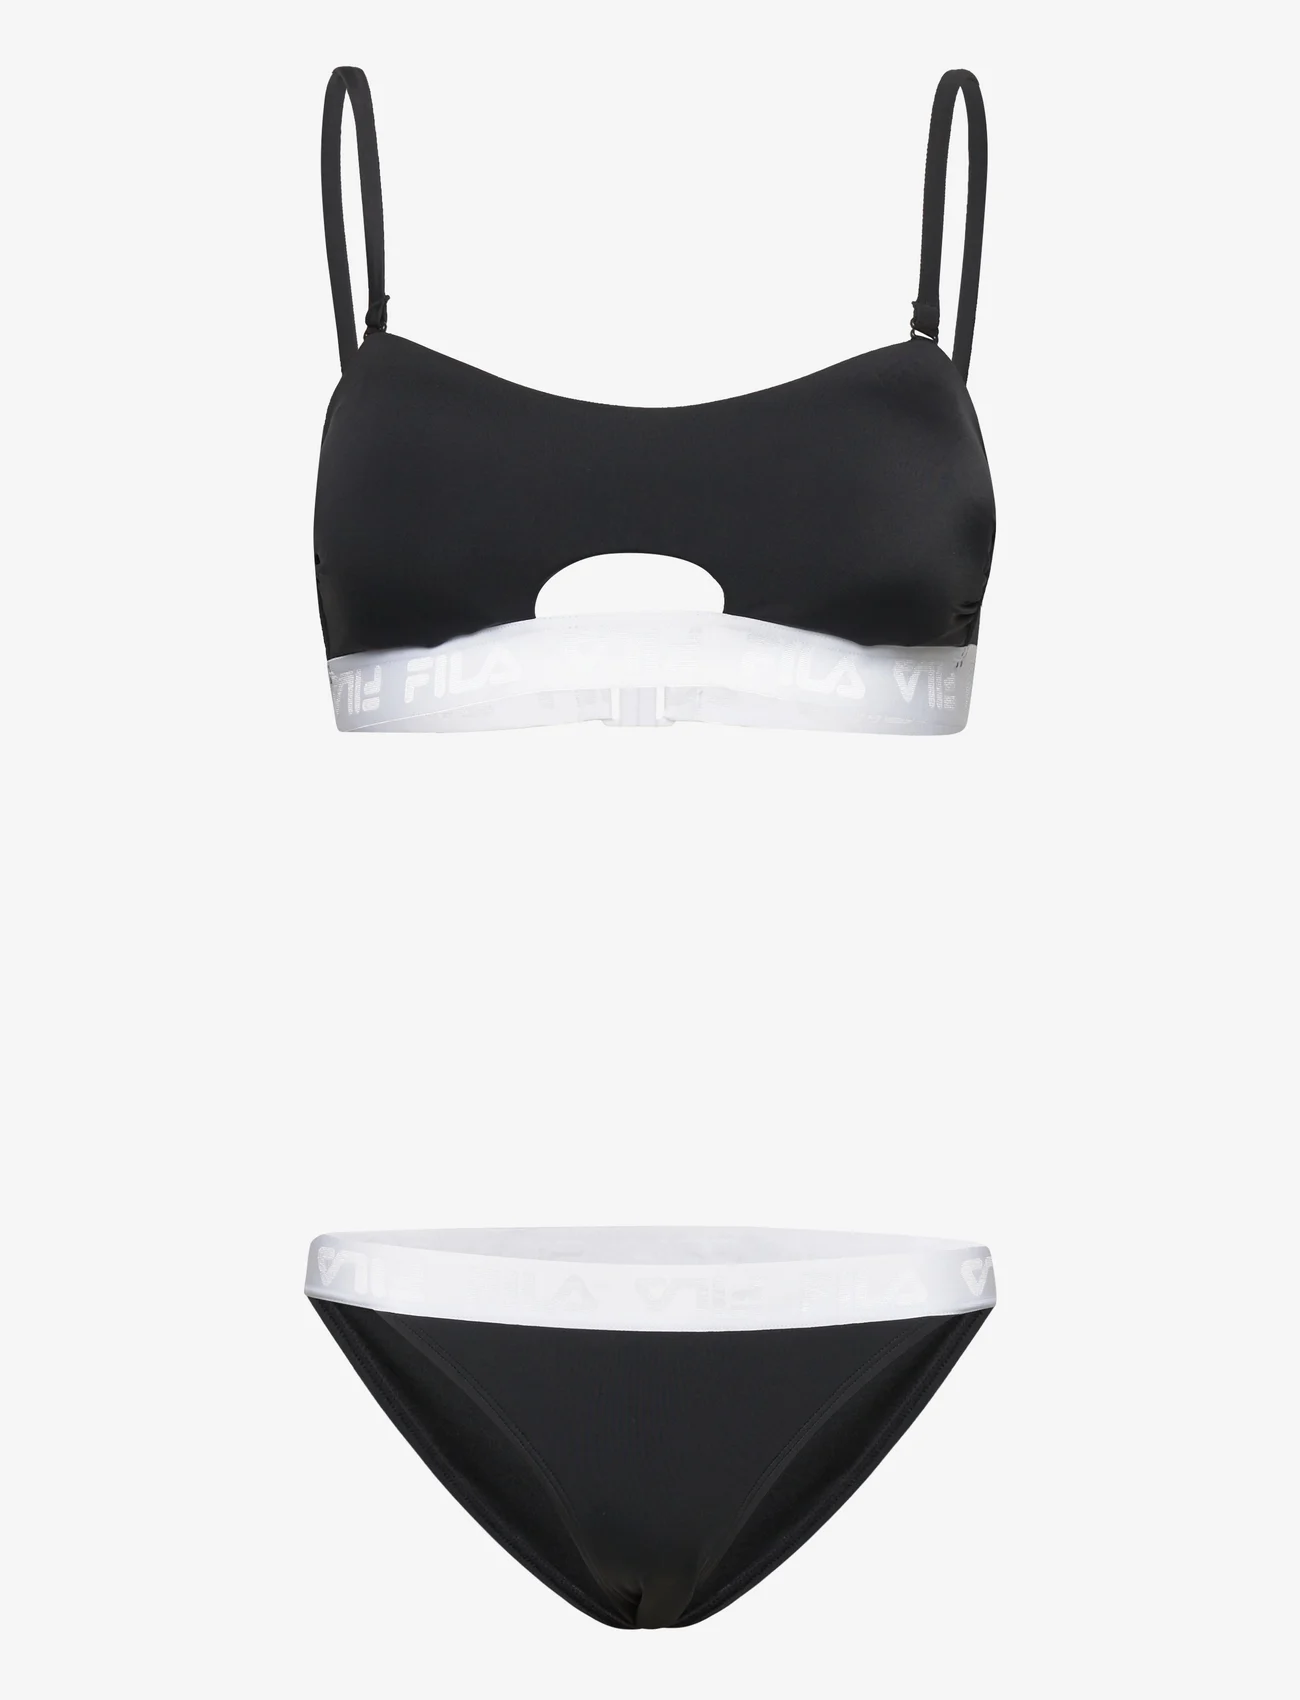 FILA - SANMING bandeau bikini - bikini set - black - 0